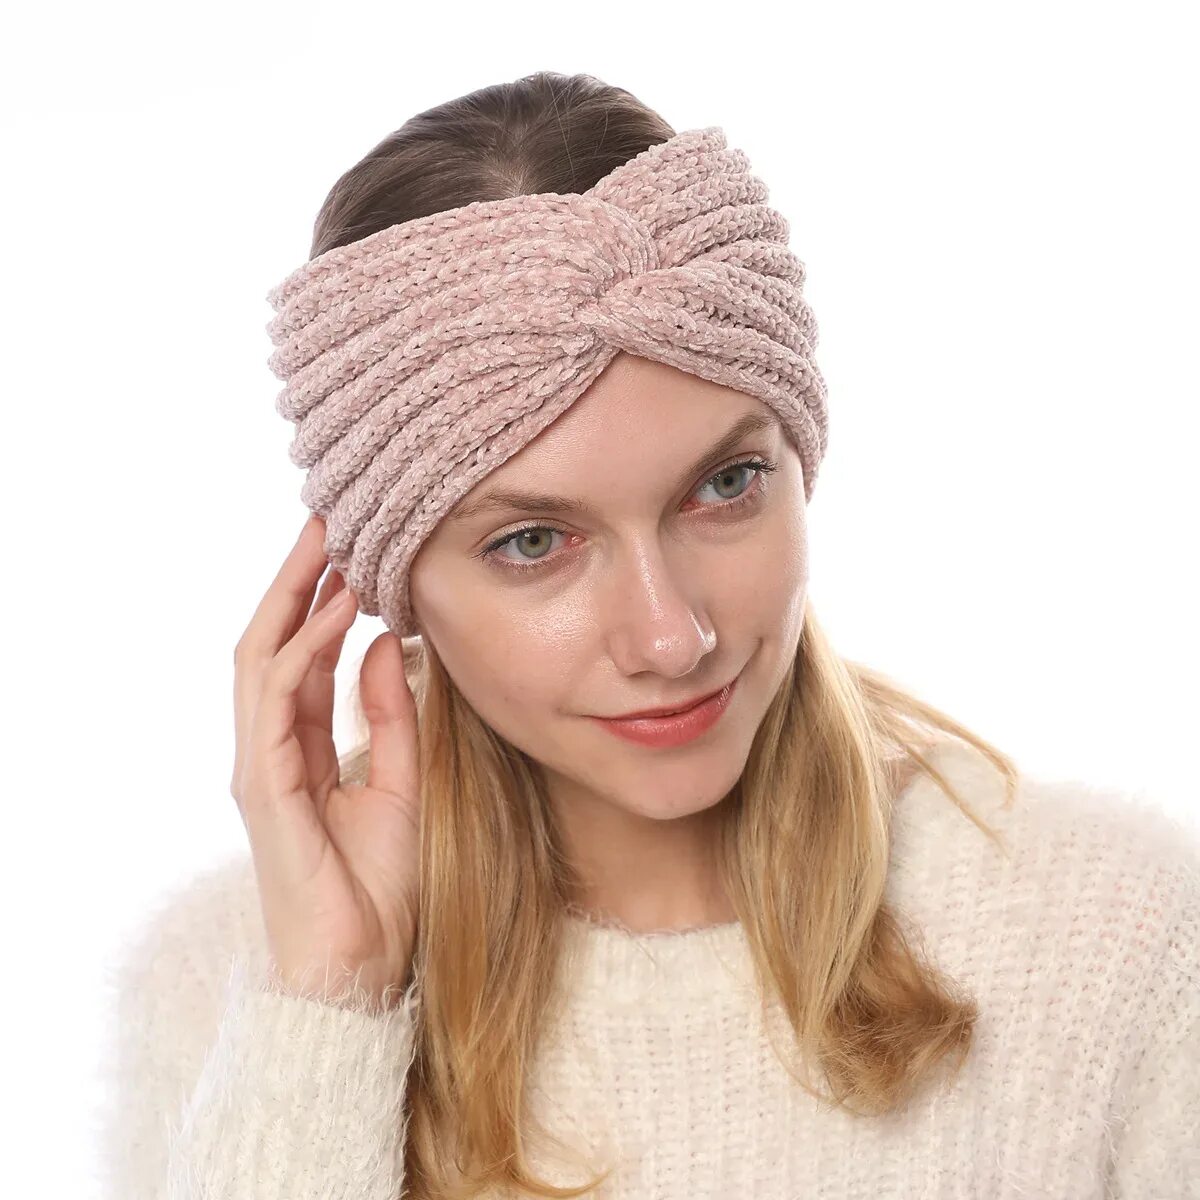 Вязка повязка на голову. Повязка на голову вязаная. Вязаные повязки на голову для женщин. Повязка на голову вязаная розовая. Красивые повязки на голову спицами.